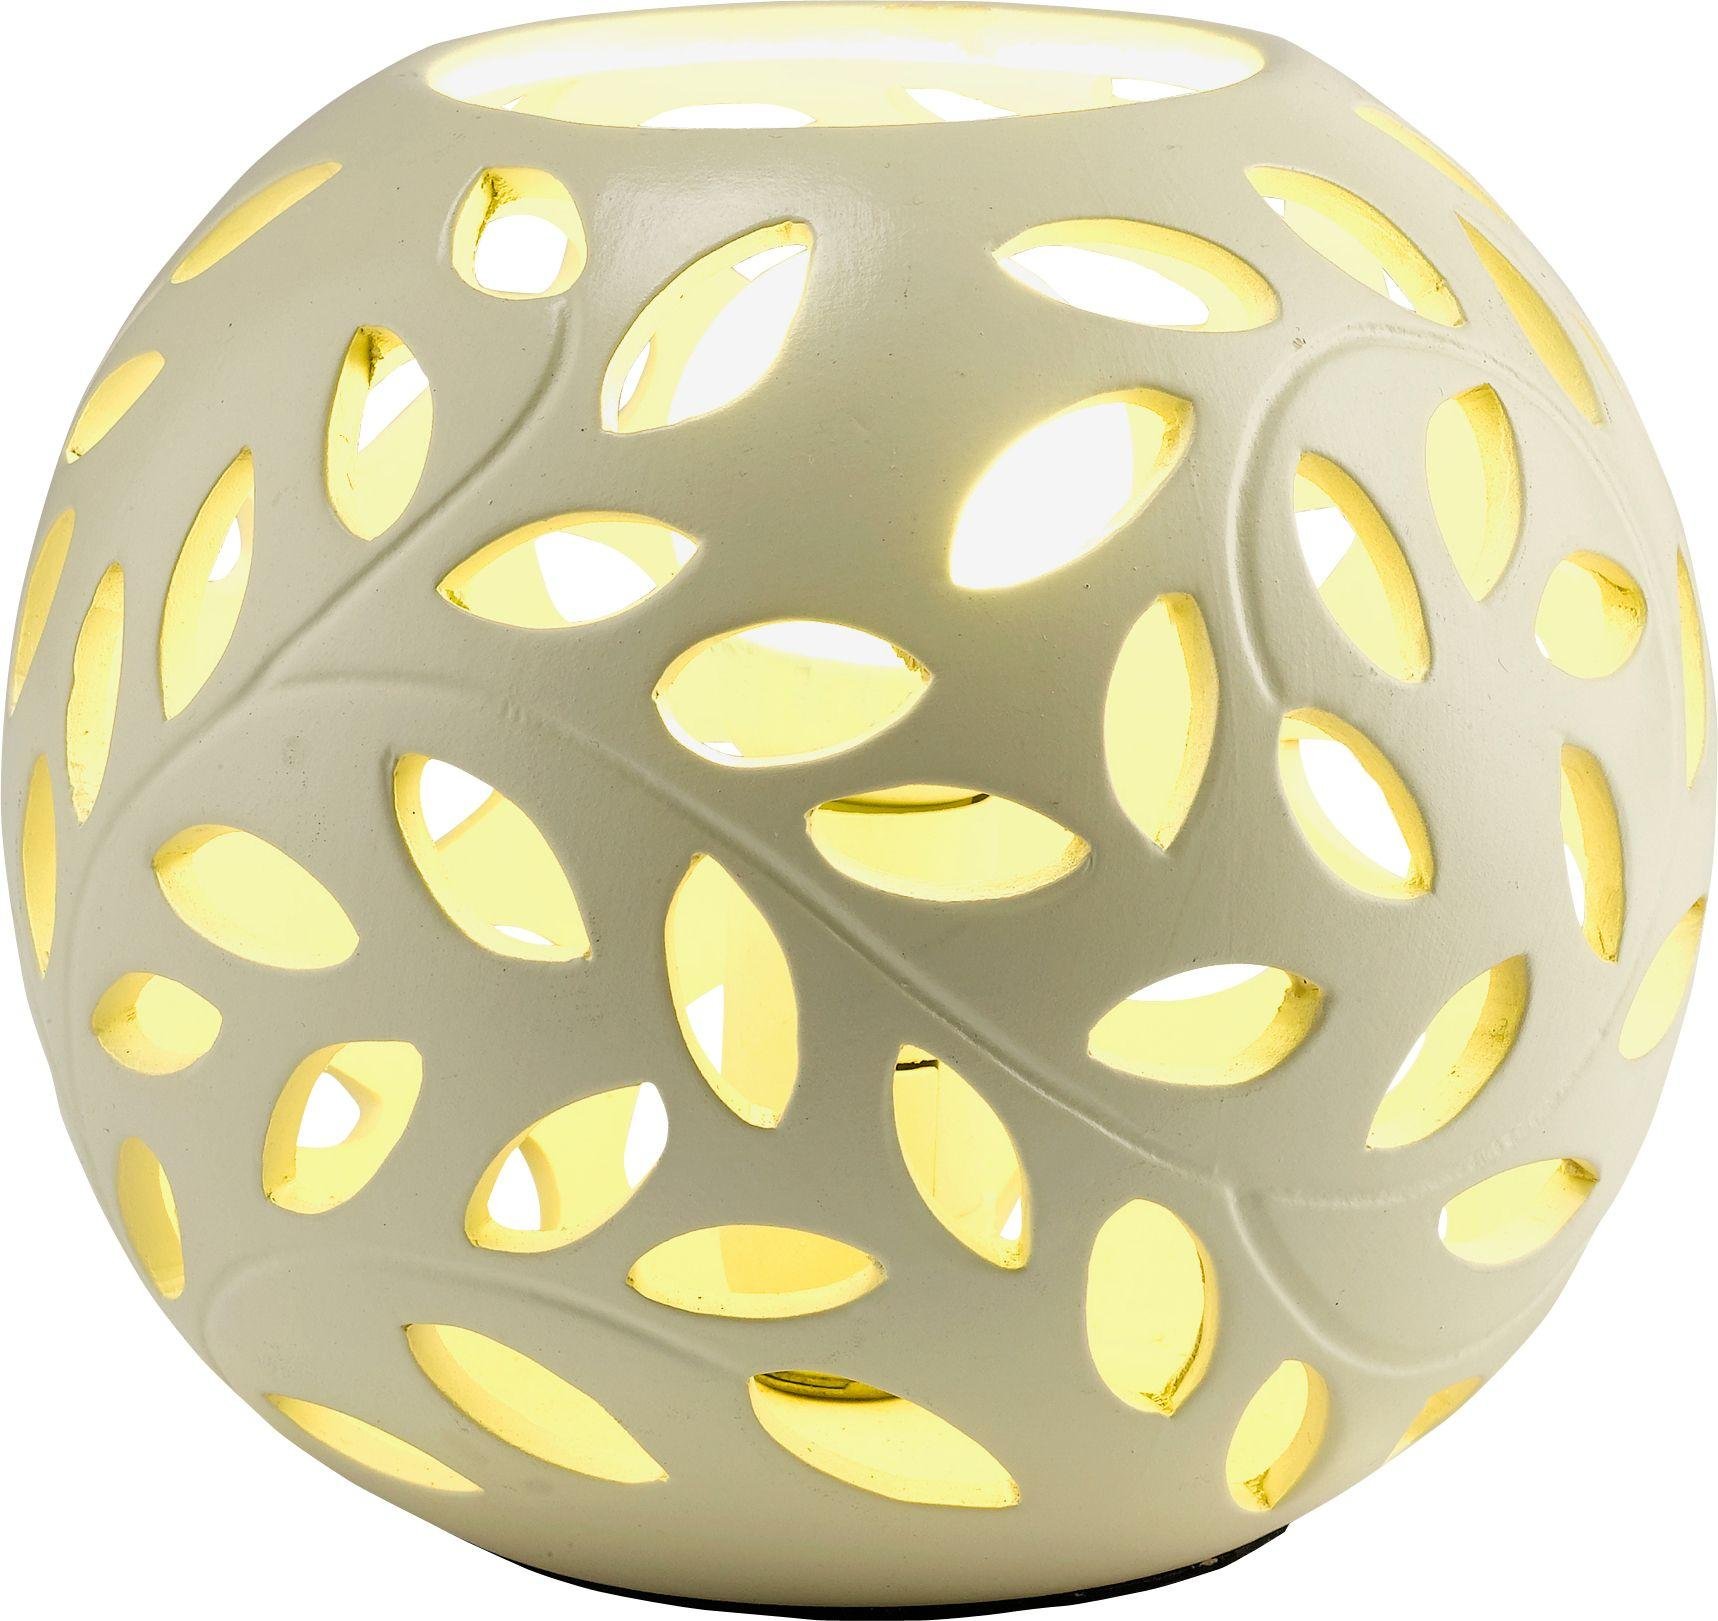 Argos Home Rowan Leaves Ceramic Table Lamp - Cream